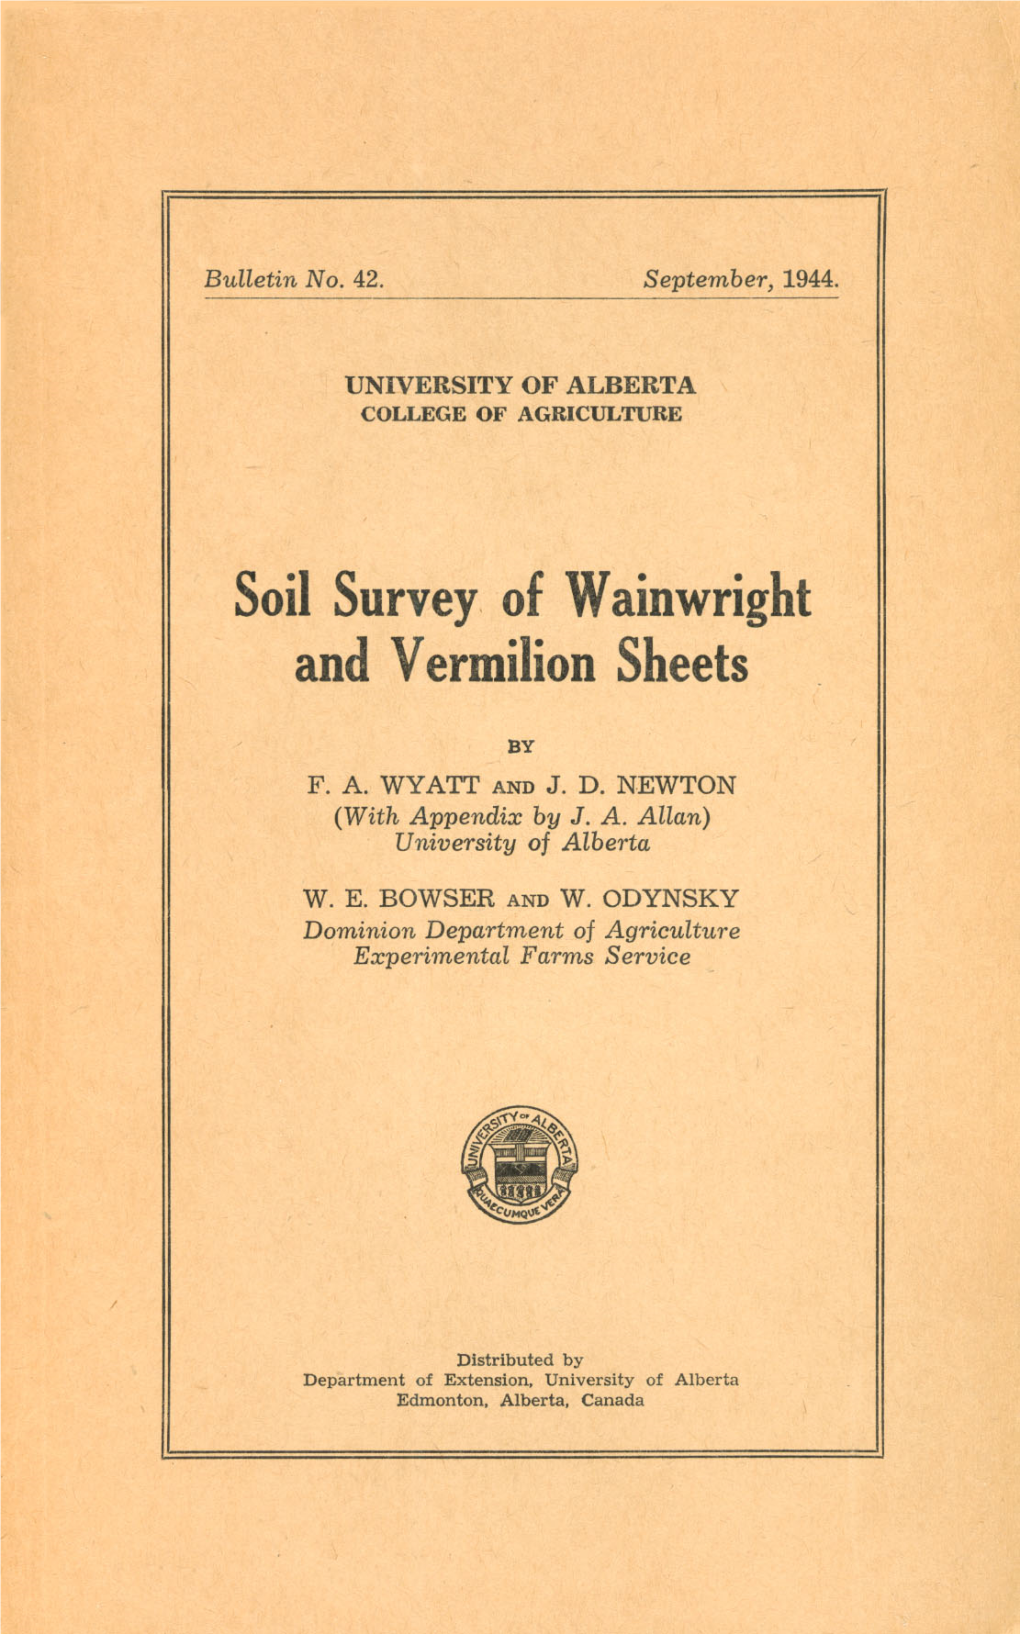 Soi1 Survey of Wainwright and Vermilion Sheets